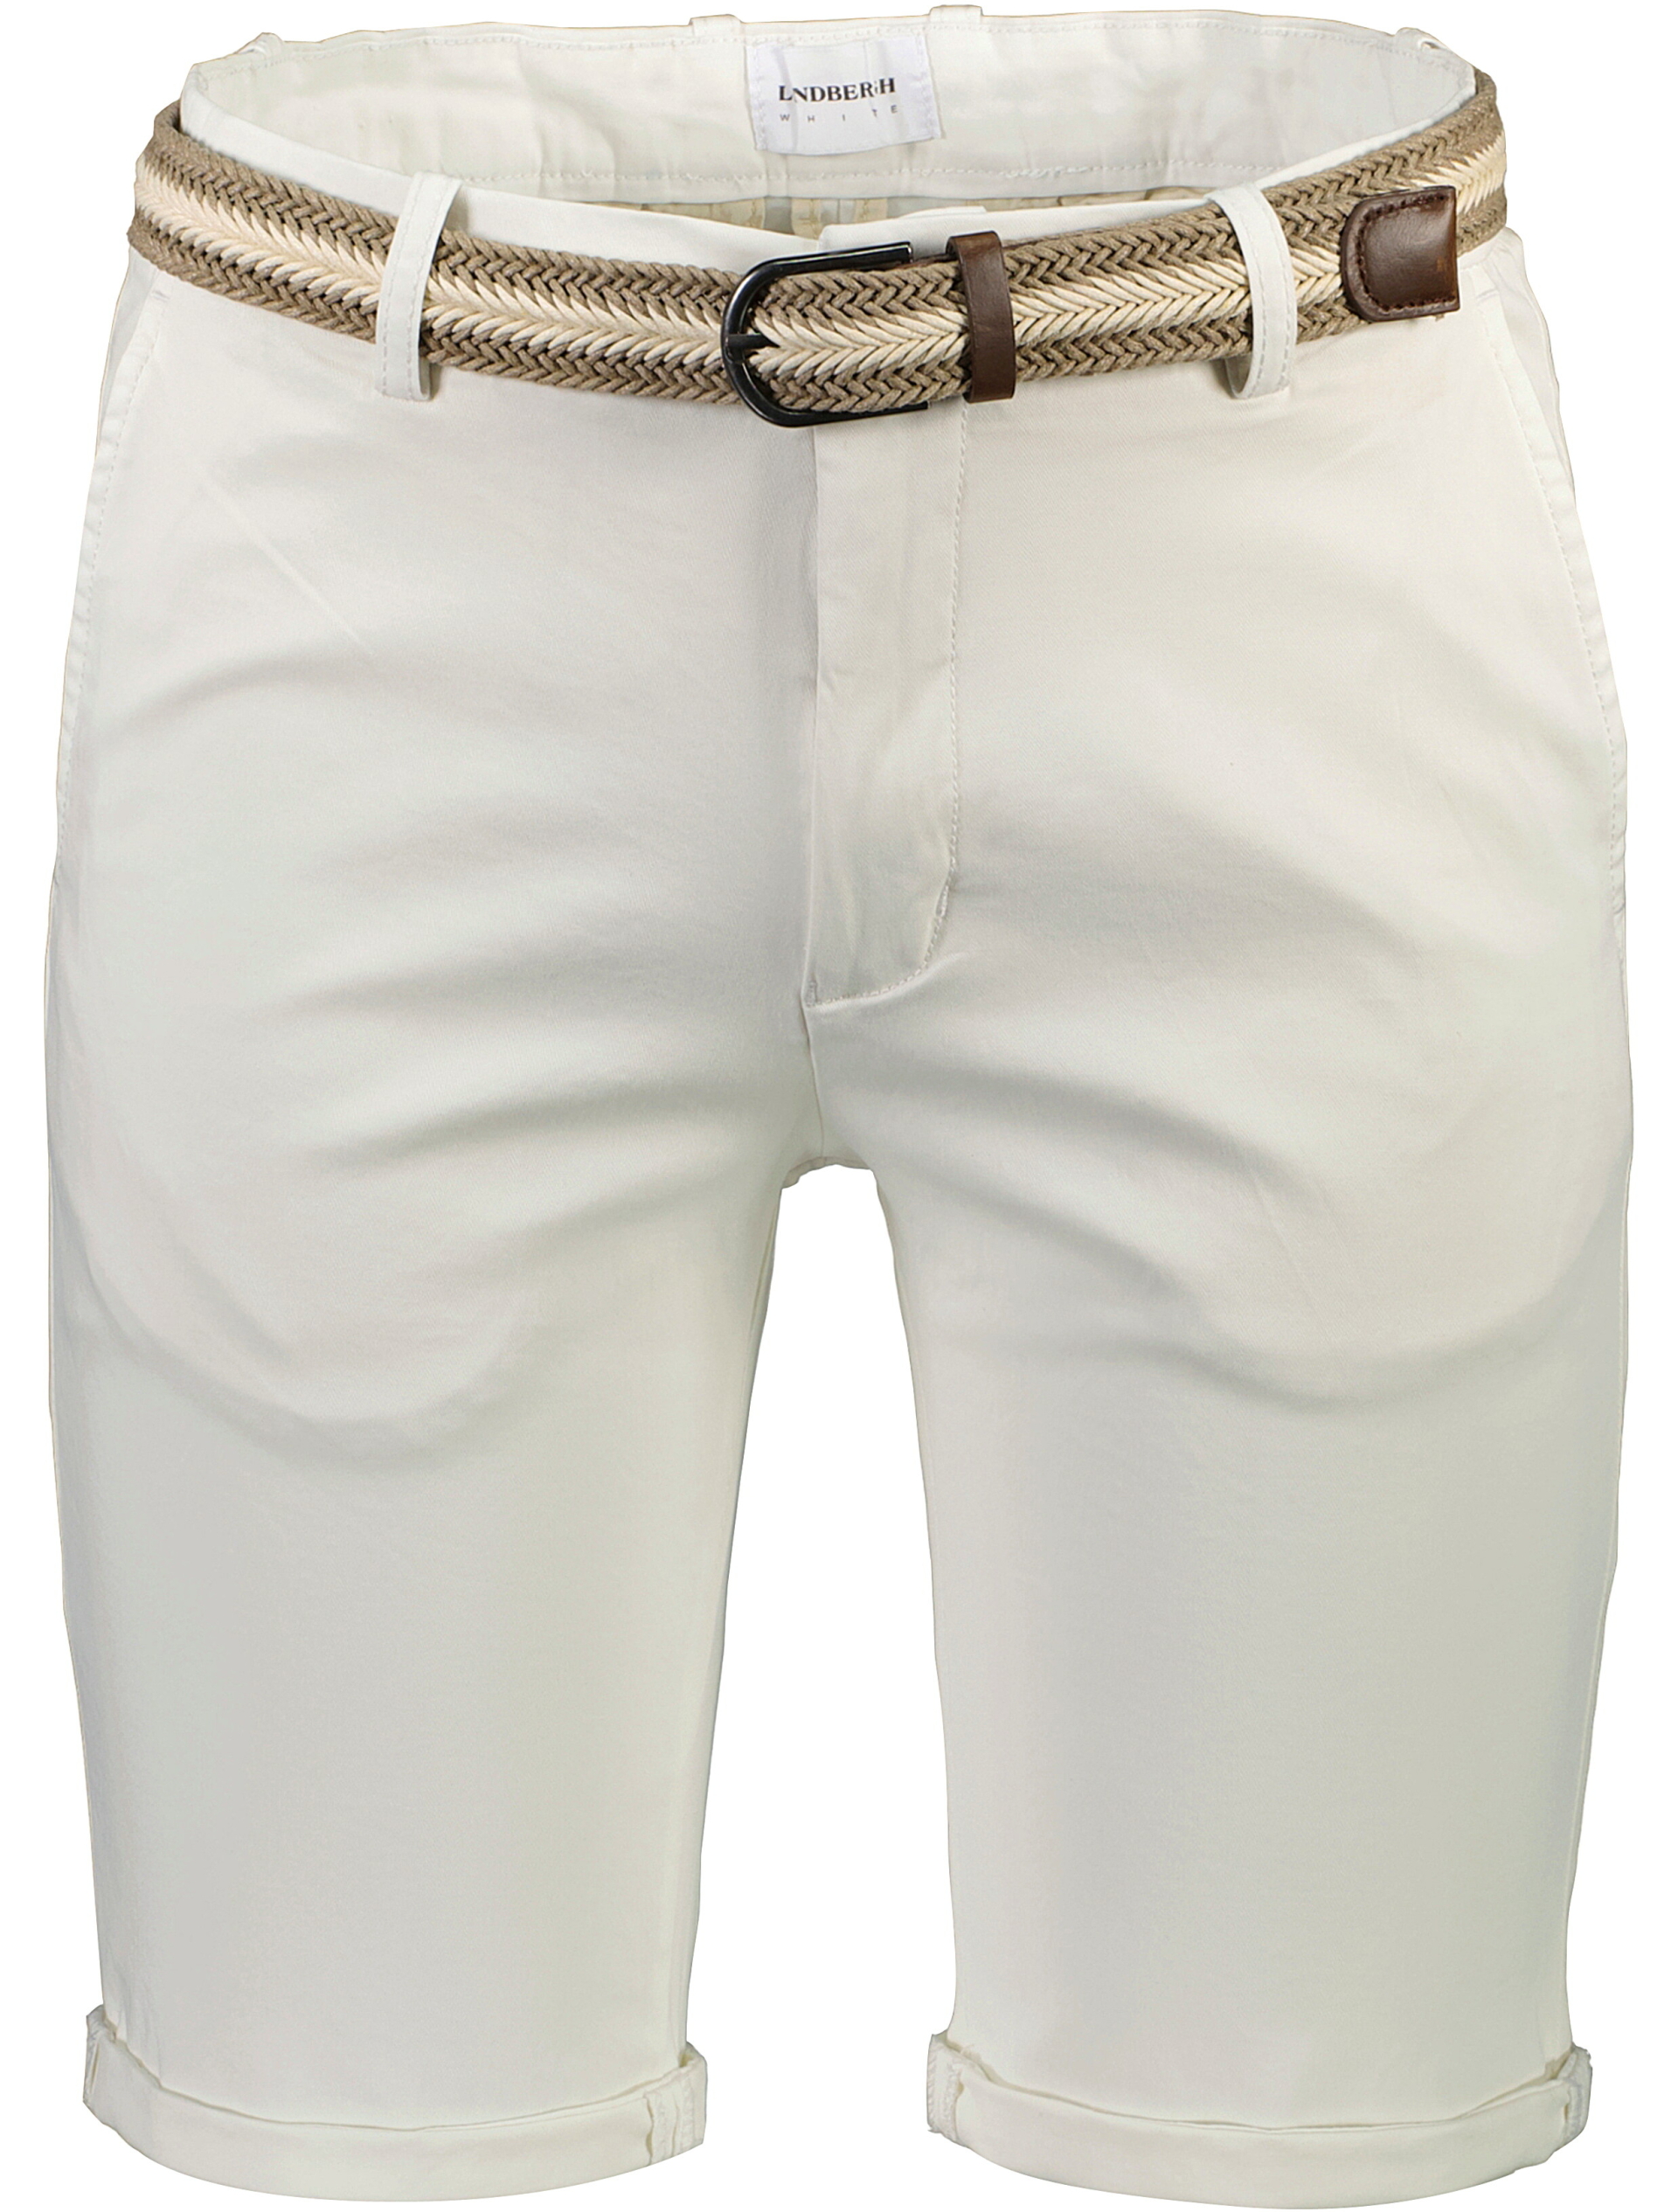 Lindbergh Chino shorts hvid / off white